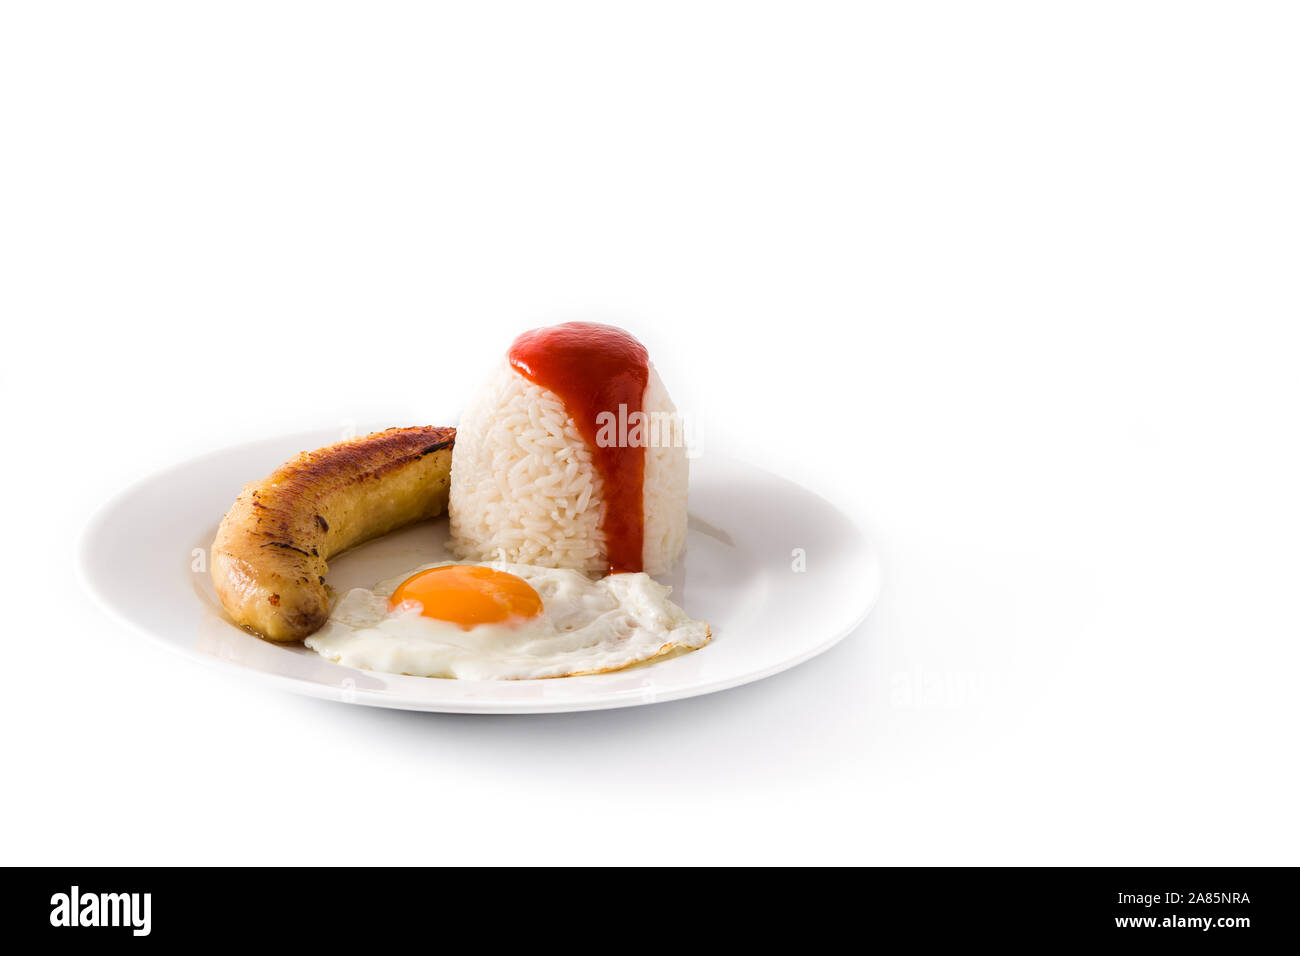 Arroz a la cubana.Typical Cuban rice with fried banana and fried egg on a plate. Copy space Stock Photo